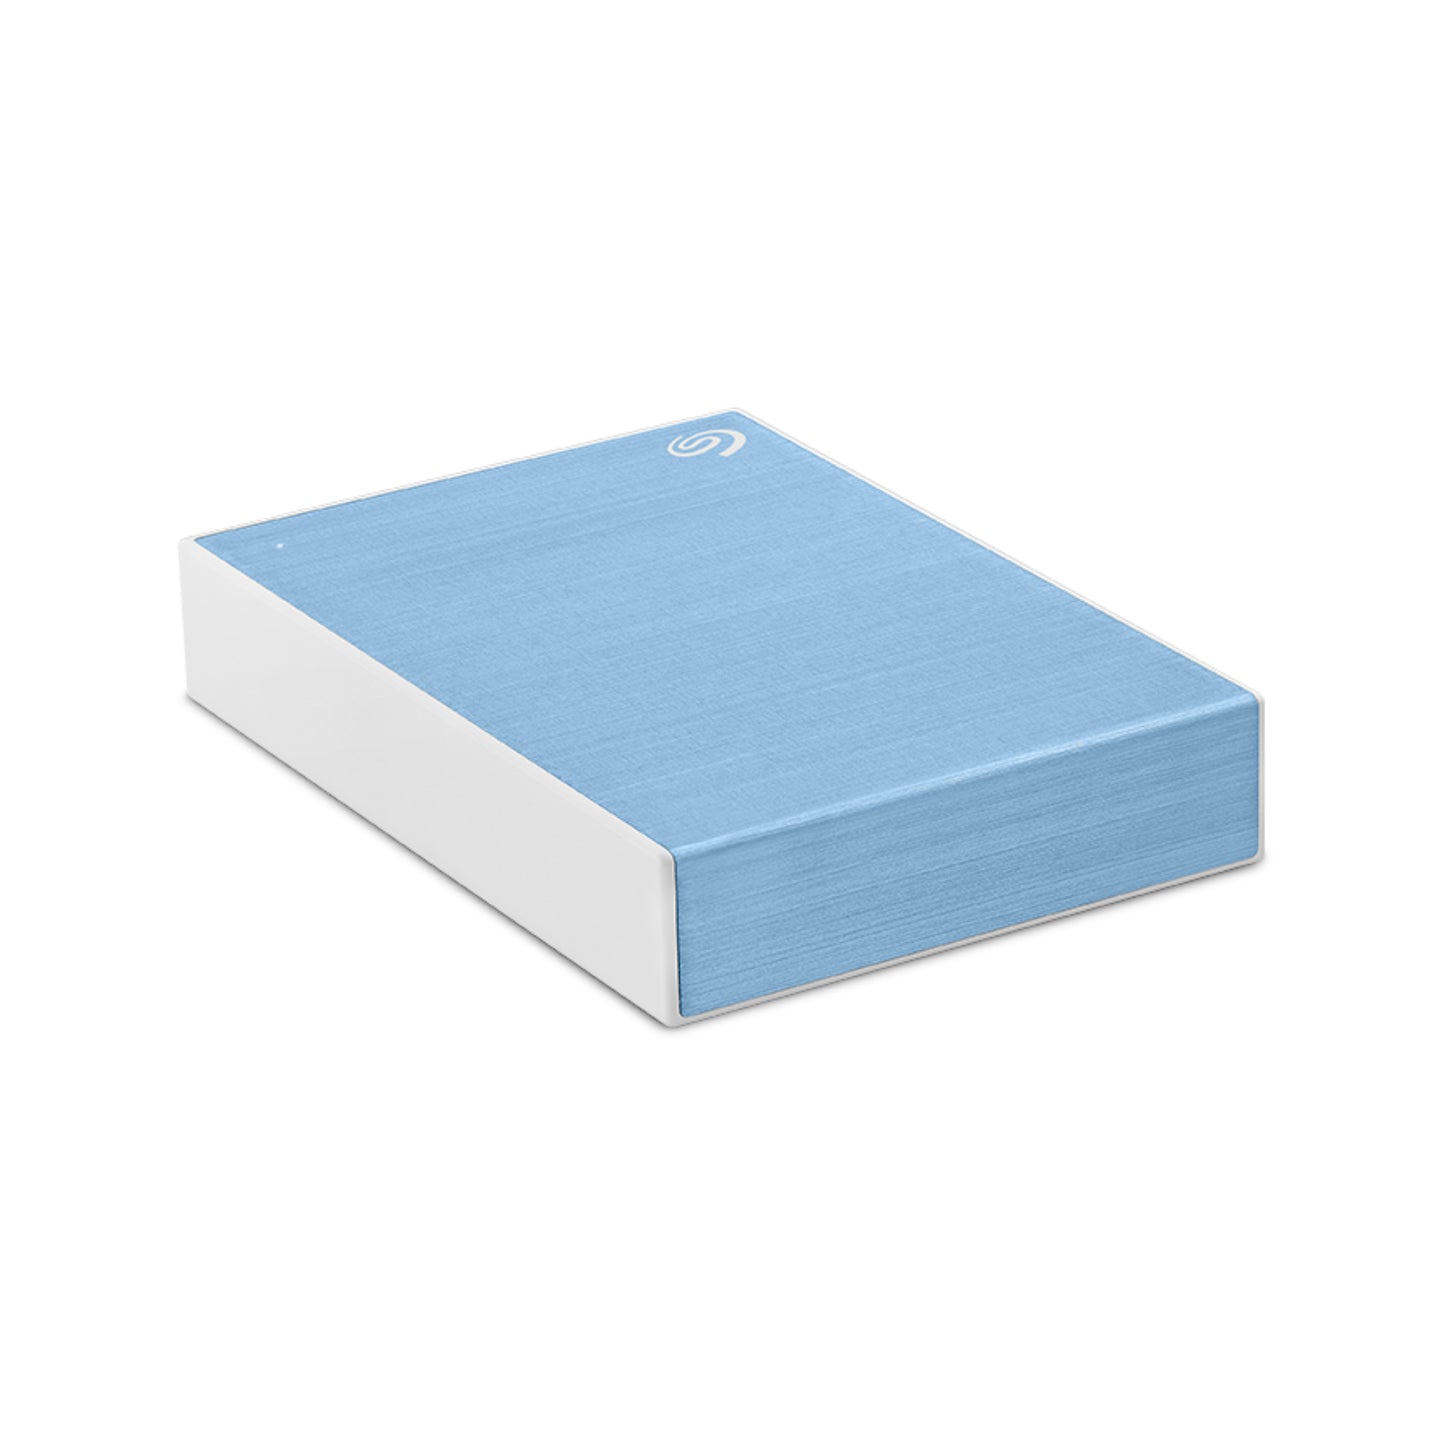 SEAGATE One Touch Slim USB 3.0 1TB - Blue